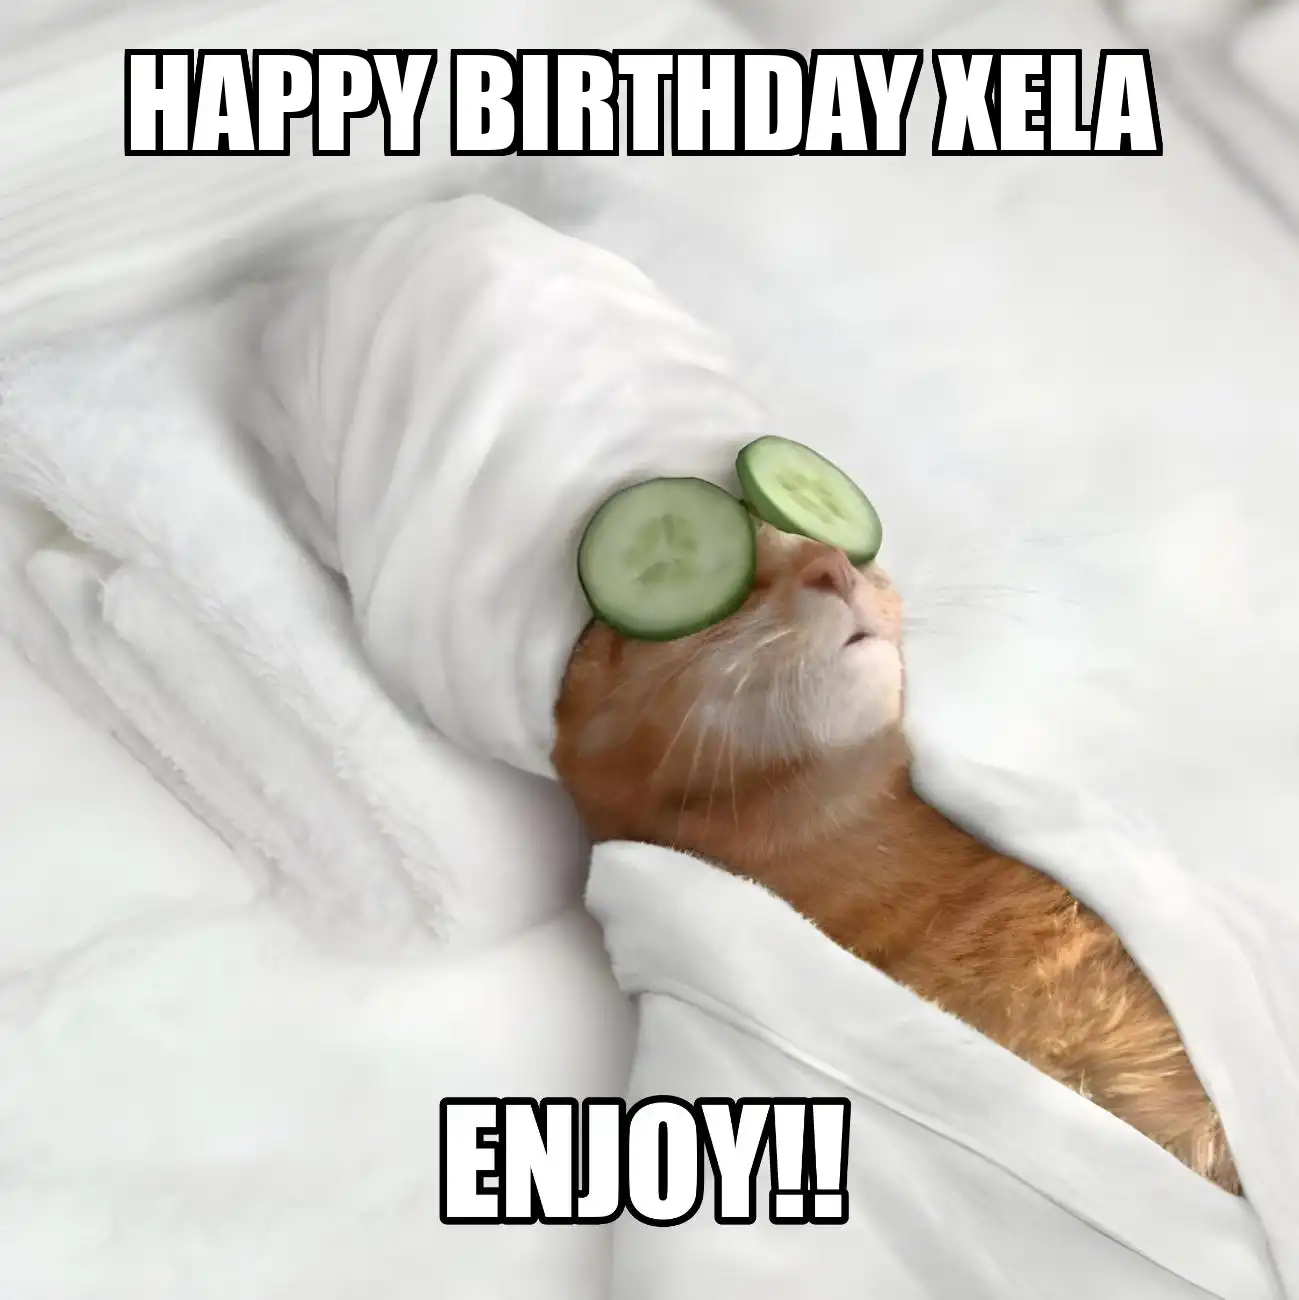 Happy Birthday Xela Enjoy Cat Meme